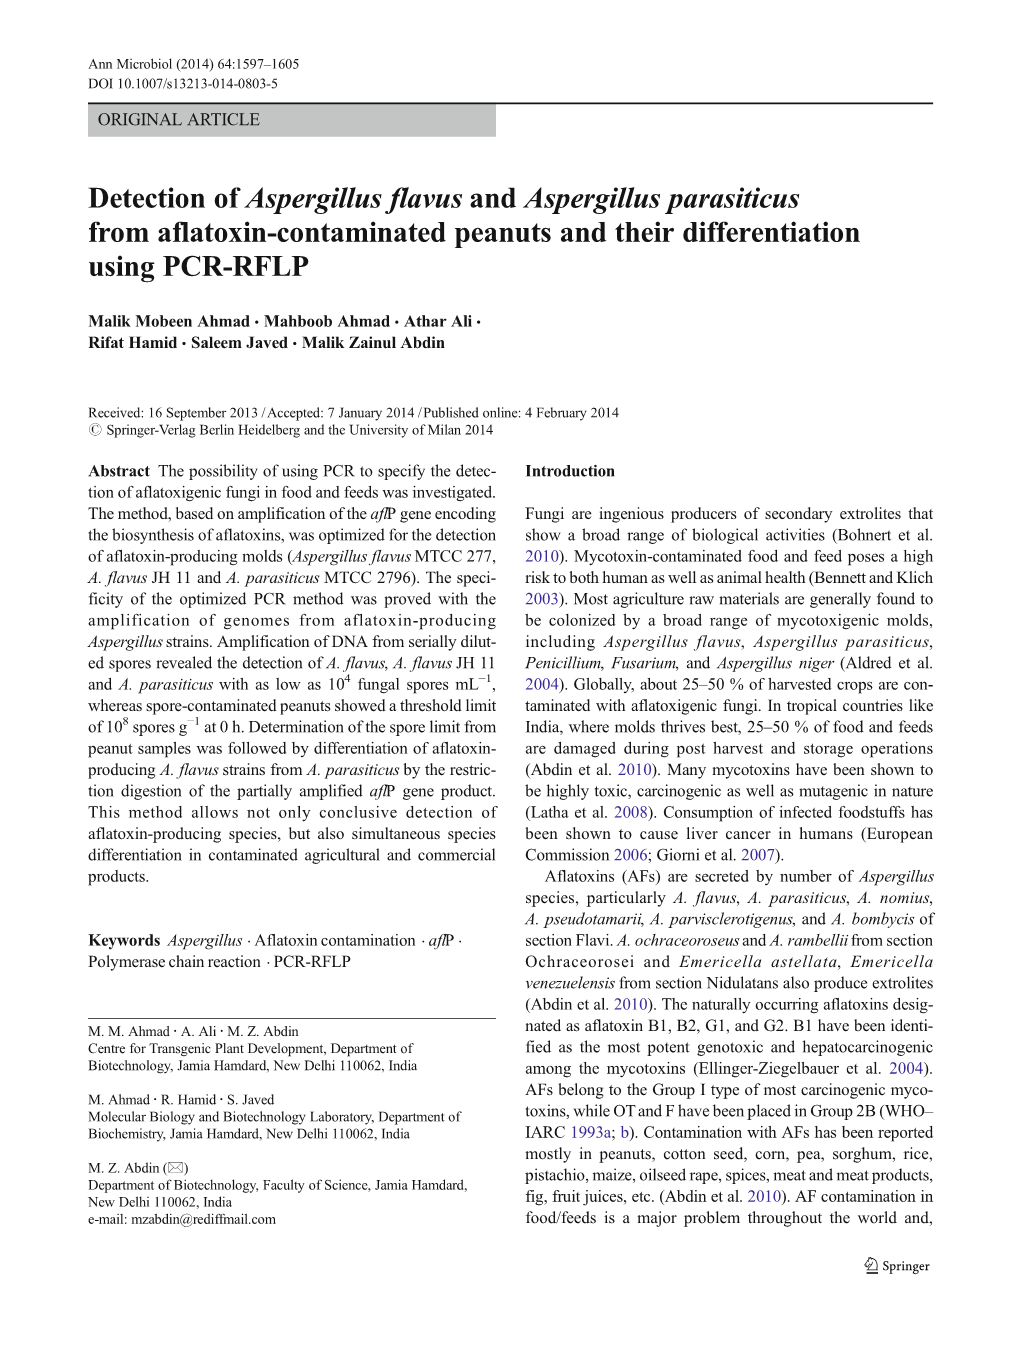 Detection of Aspergillus Flavus and Aspergillus Parasiticus from Aflatoxin-Contaminated Peanuts and Their Differentiation Using PCR-RFLP